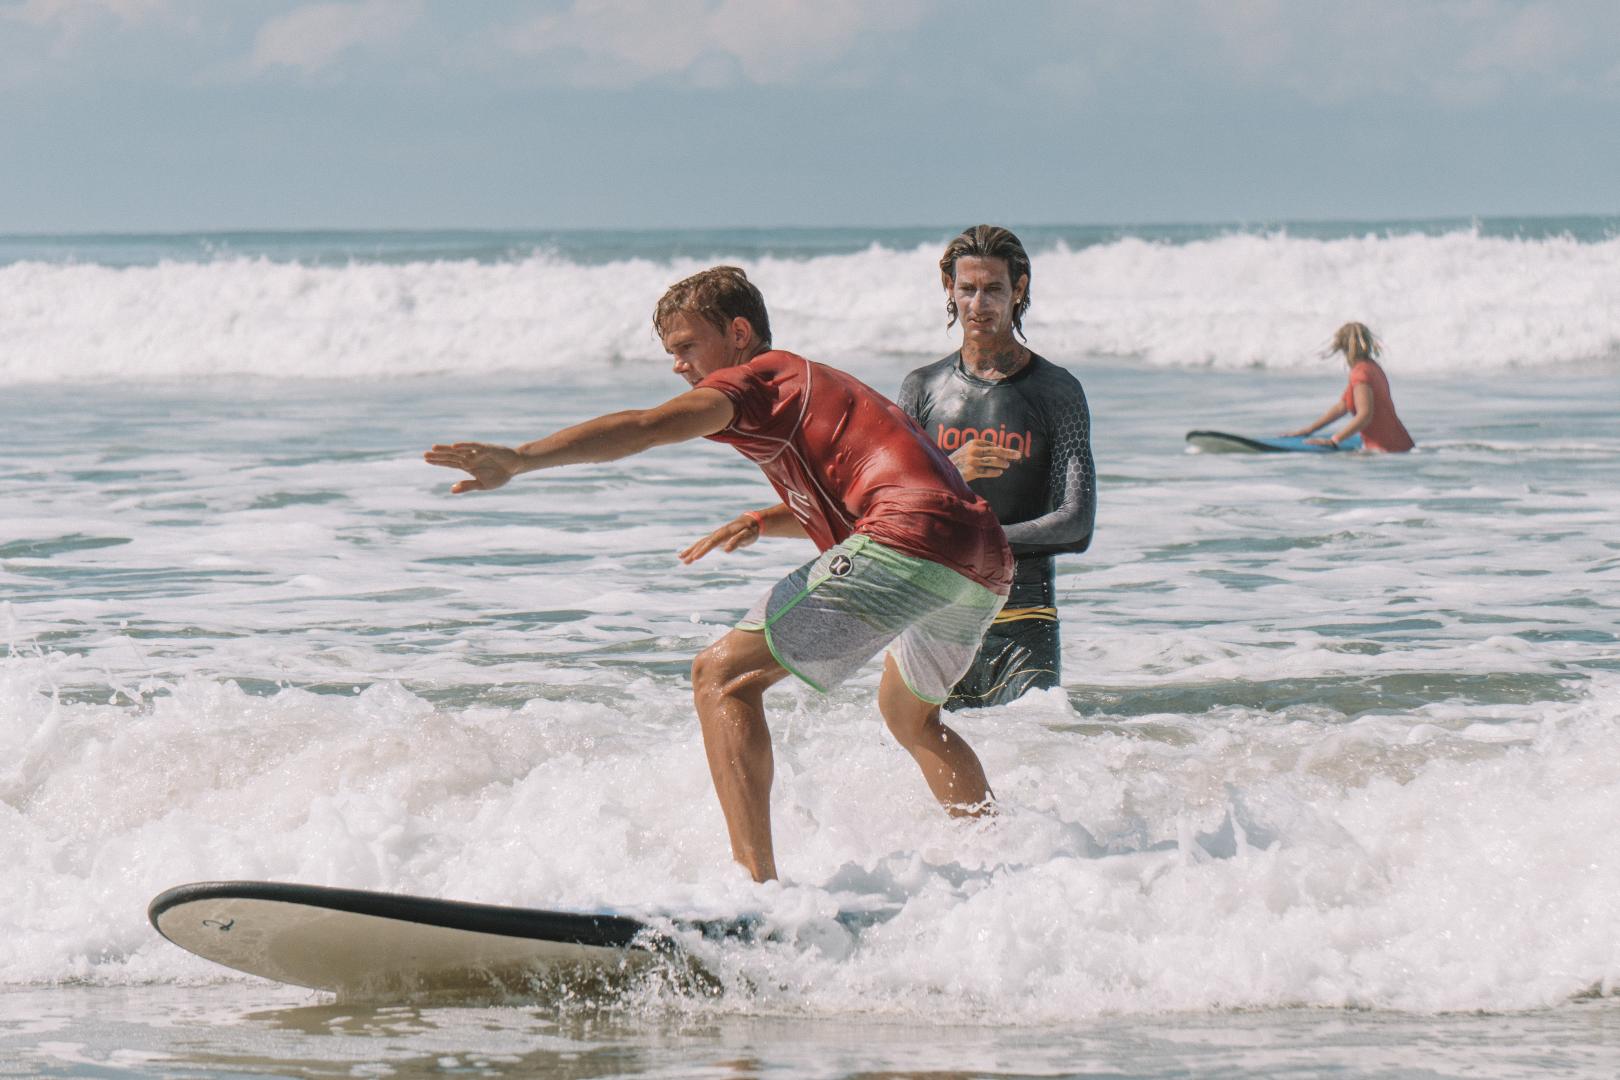 Beginner surfer with instructor